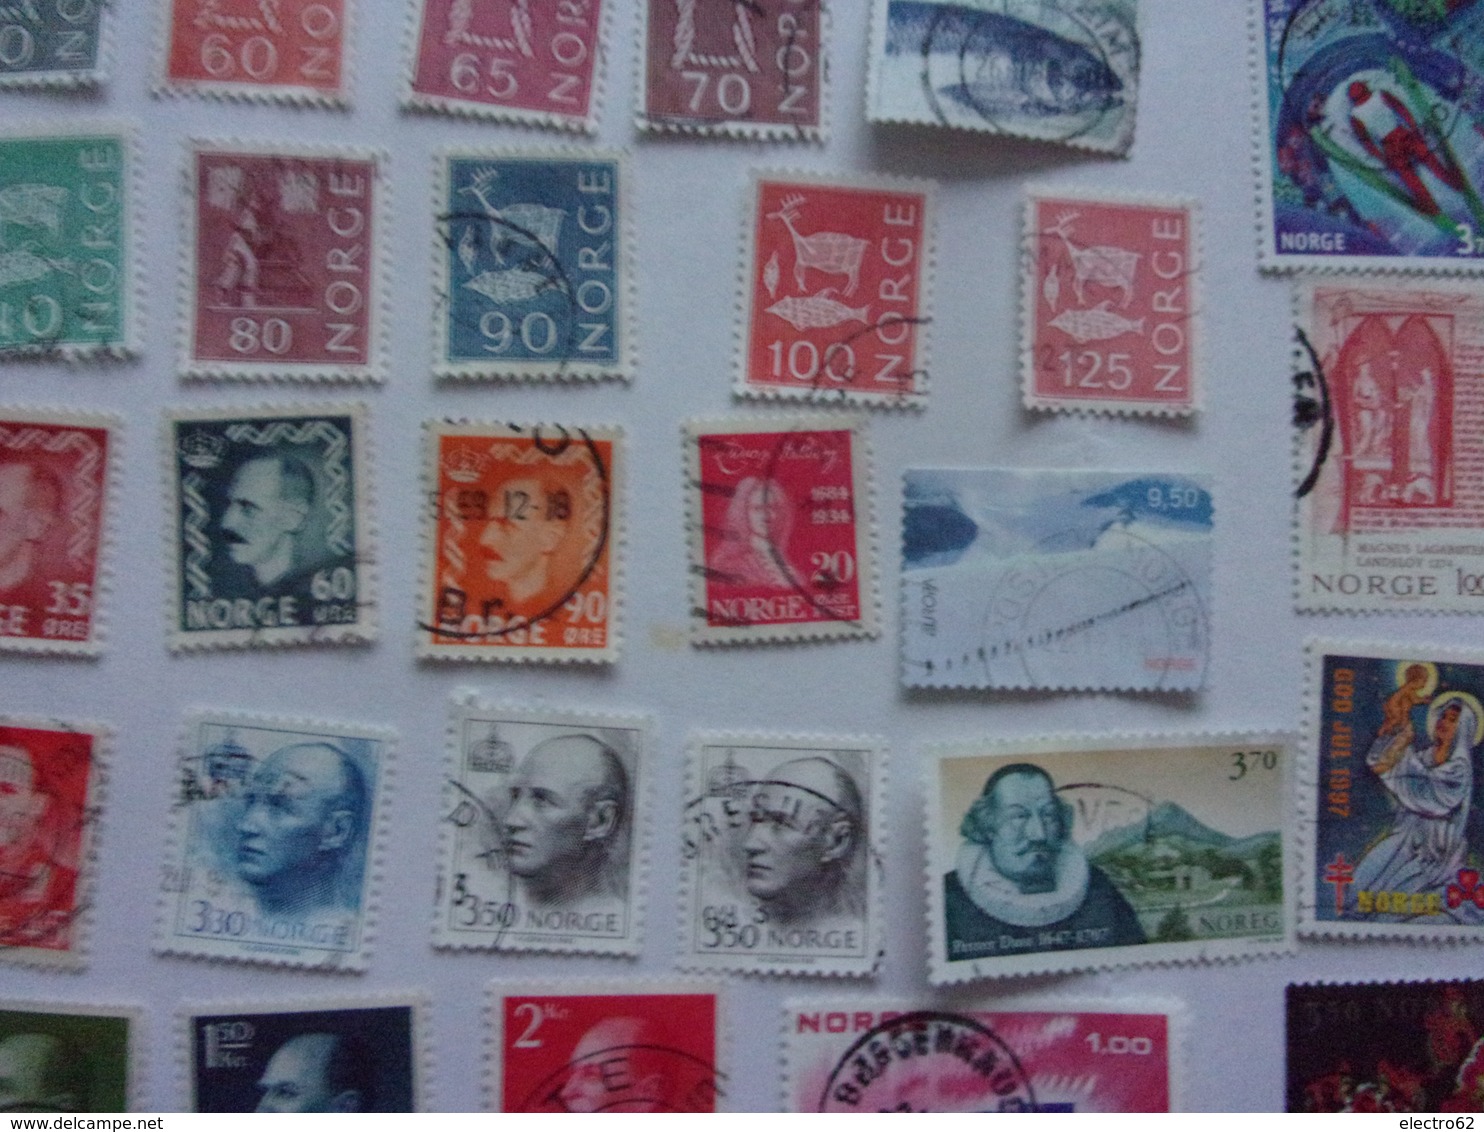 Norge Norvège Norway lot de timbres Norwegen Norvegia